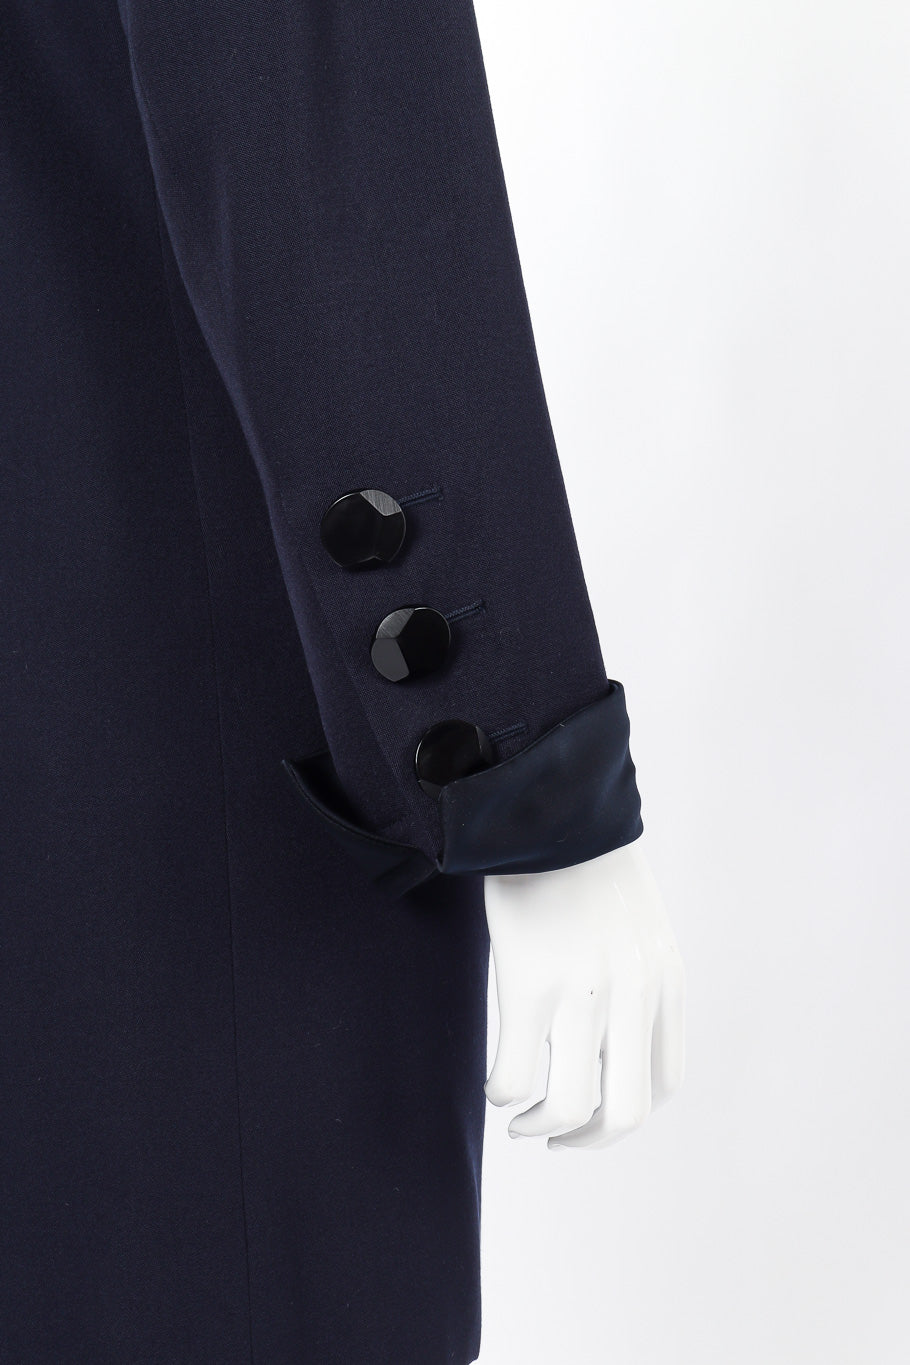 Wool Longline Blazer & Pant Set on mannequin sleeve buttons close @recessla